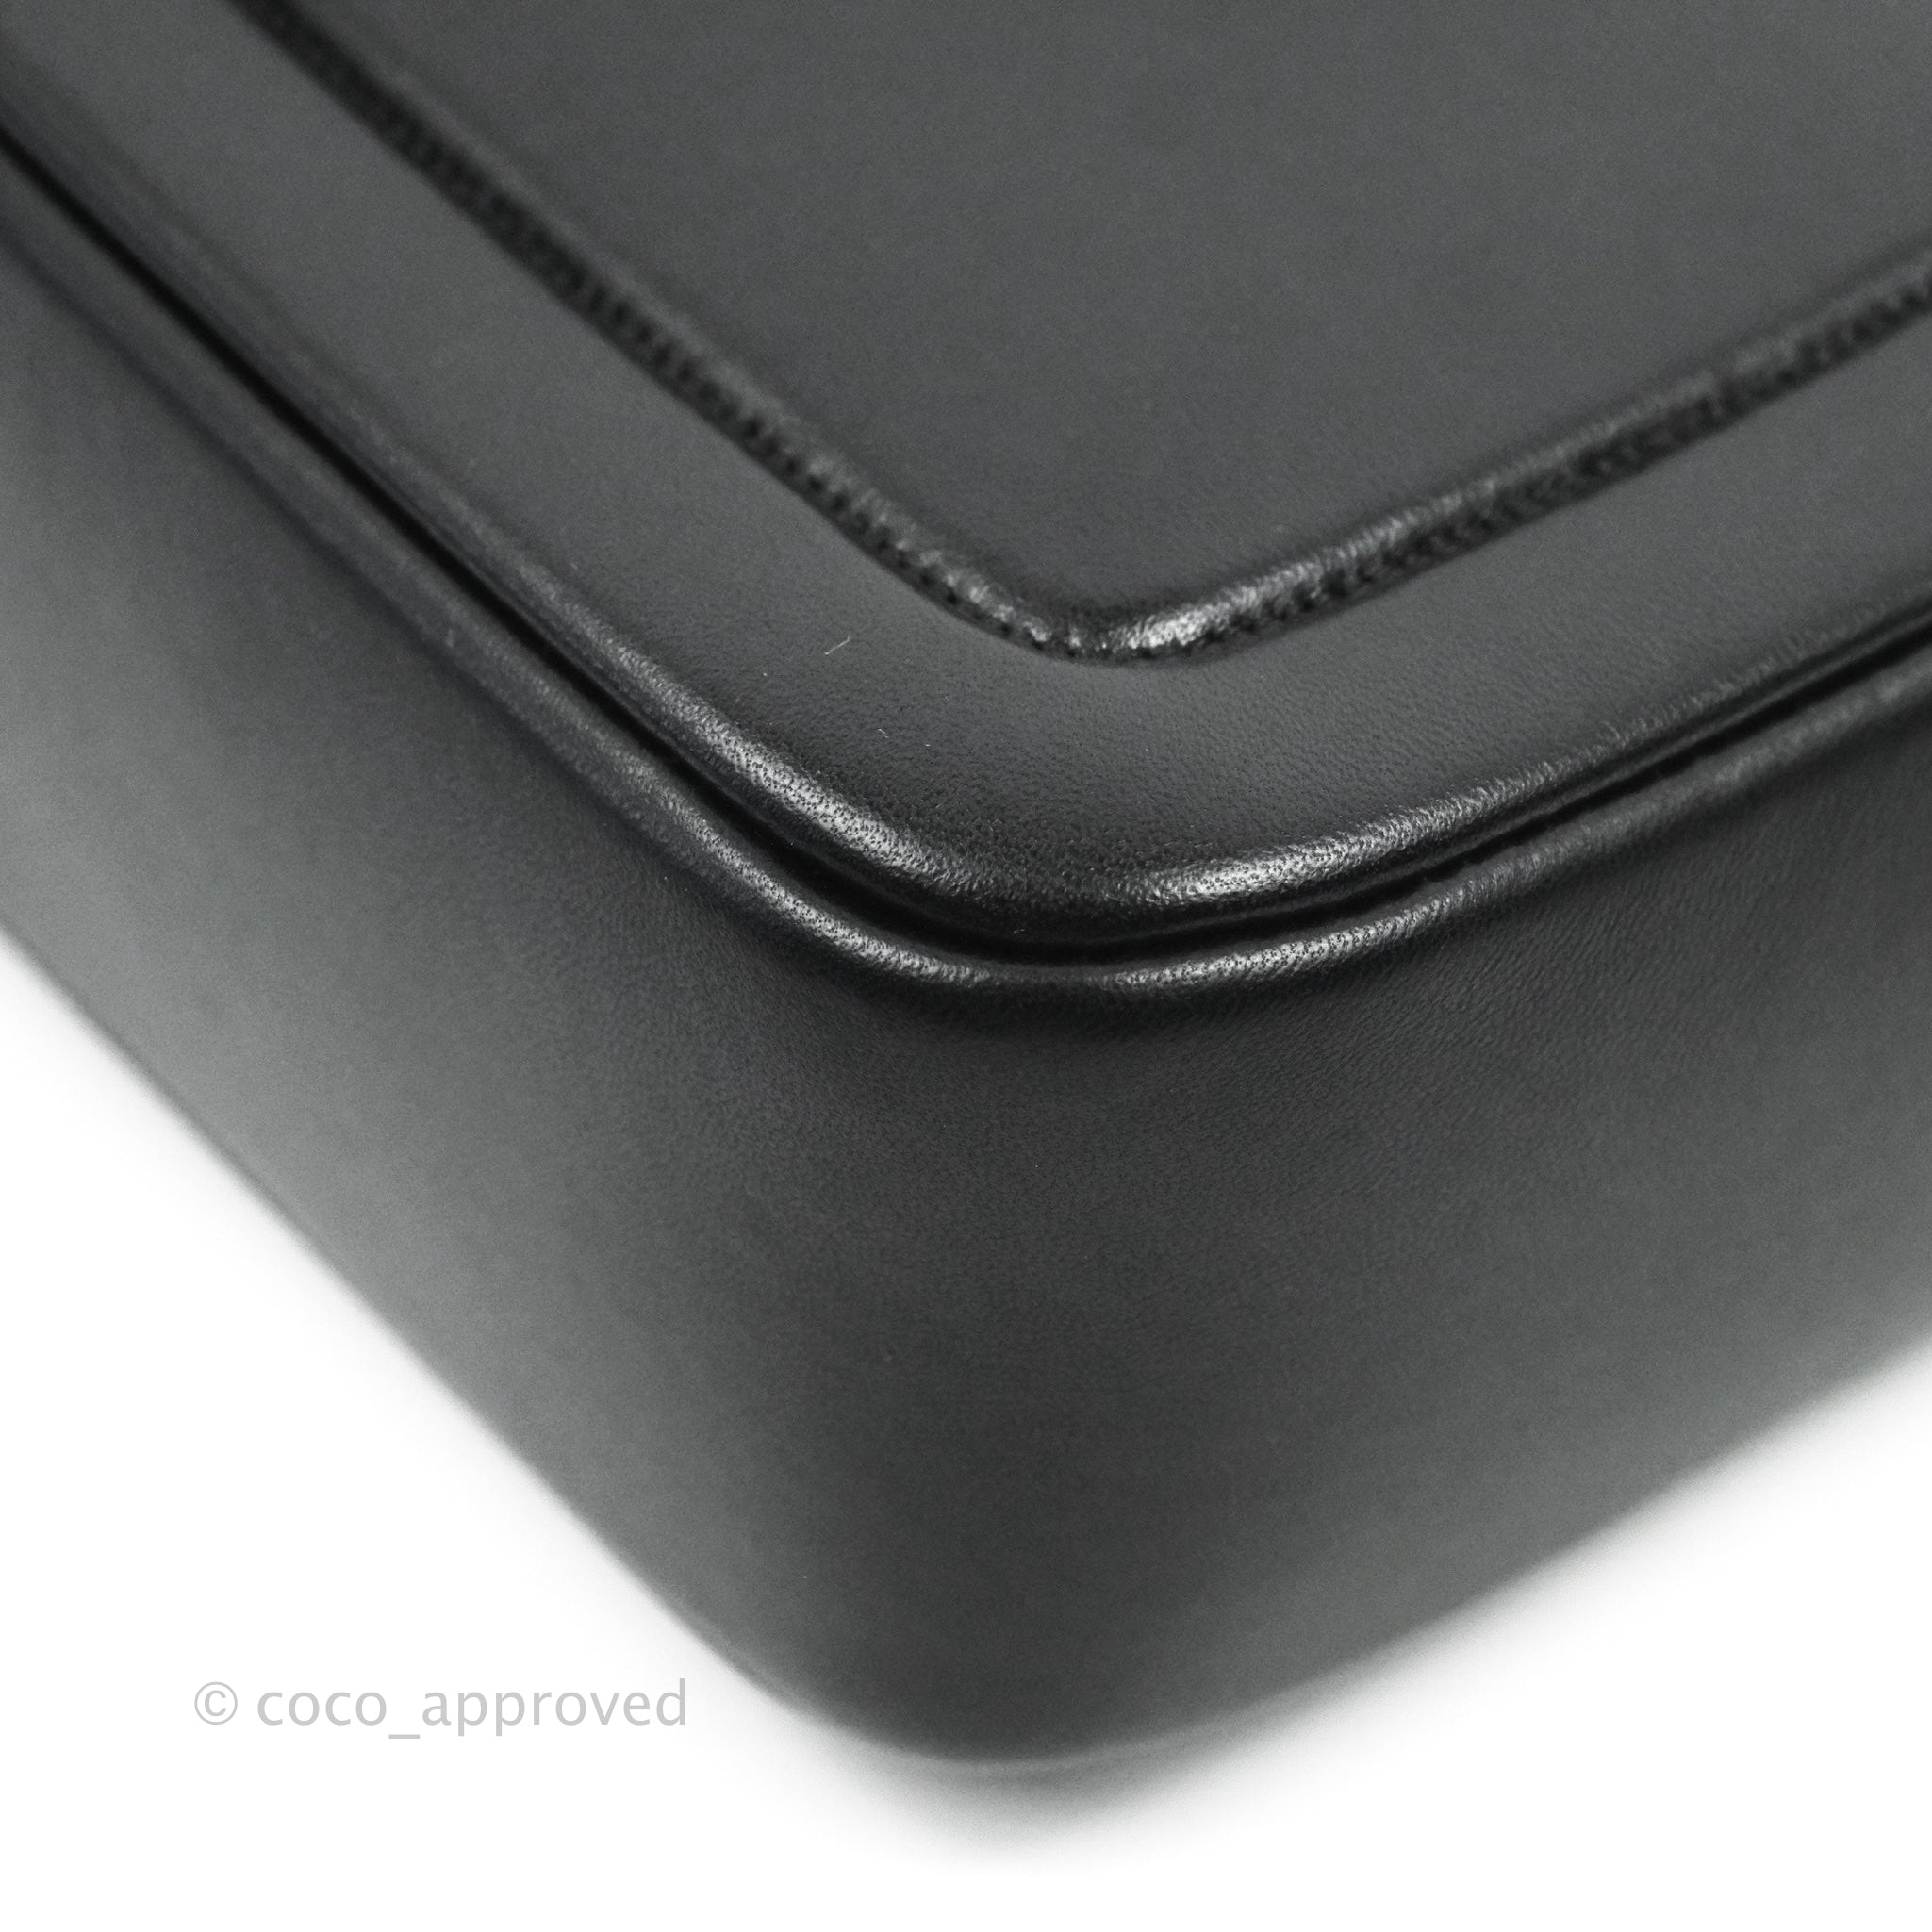 Fendi Baguette leather pouch - ShopStyle Briefcases